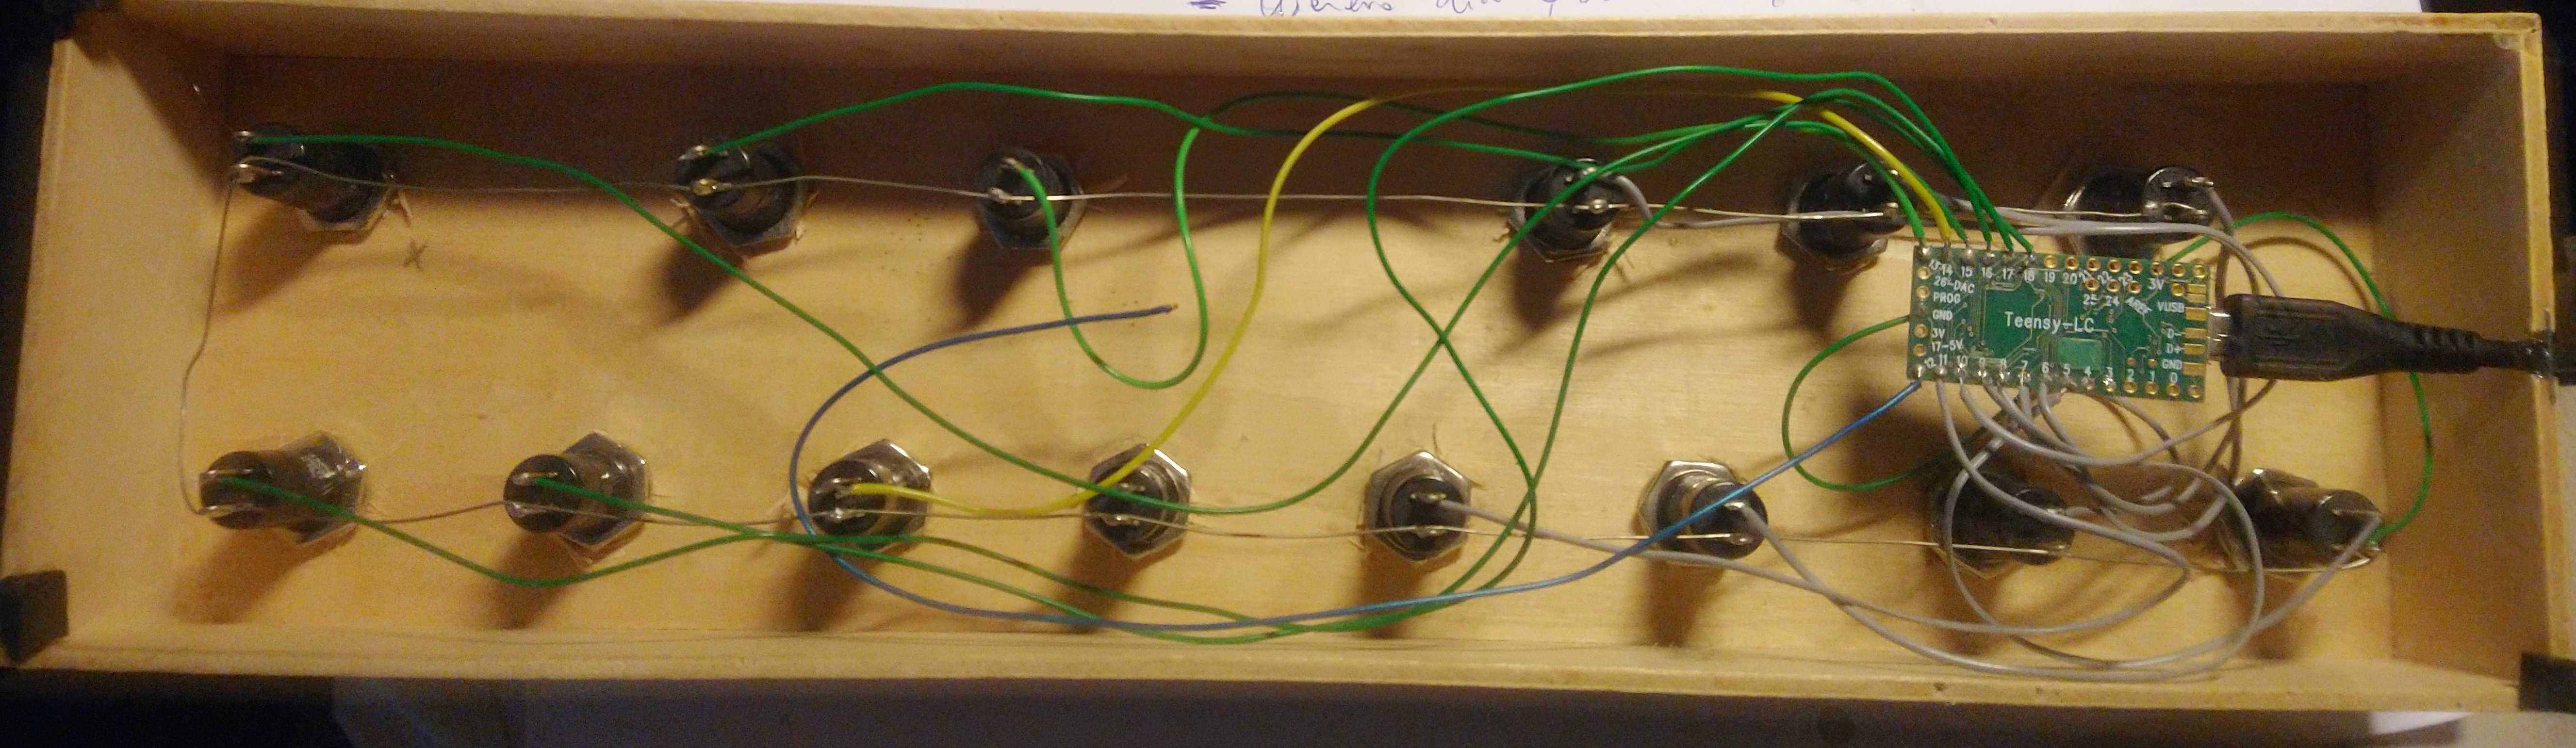 MIDI-pedal inside